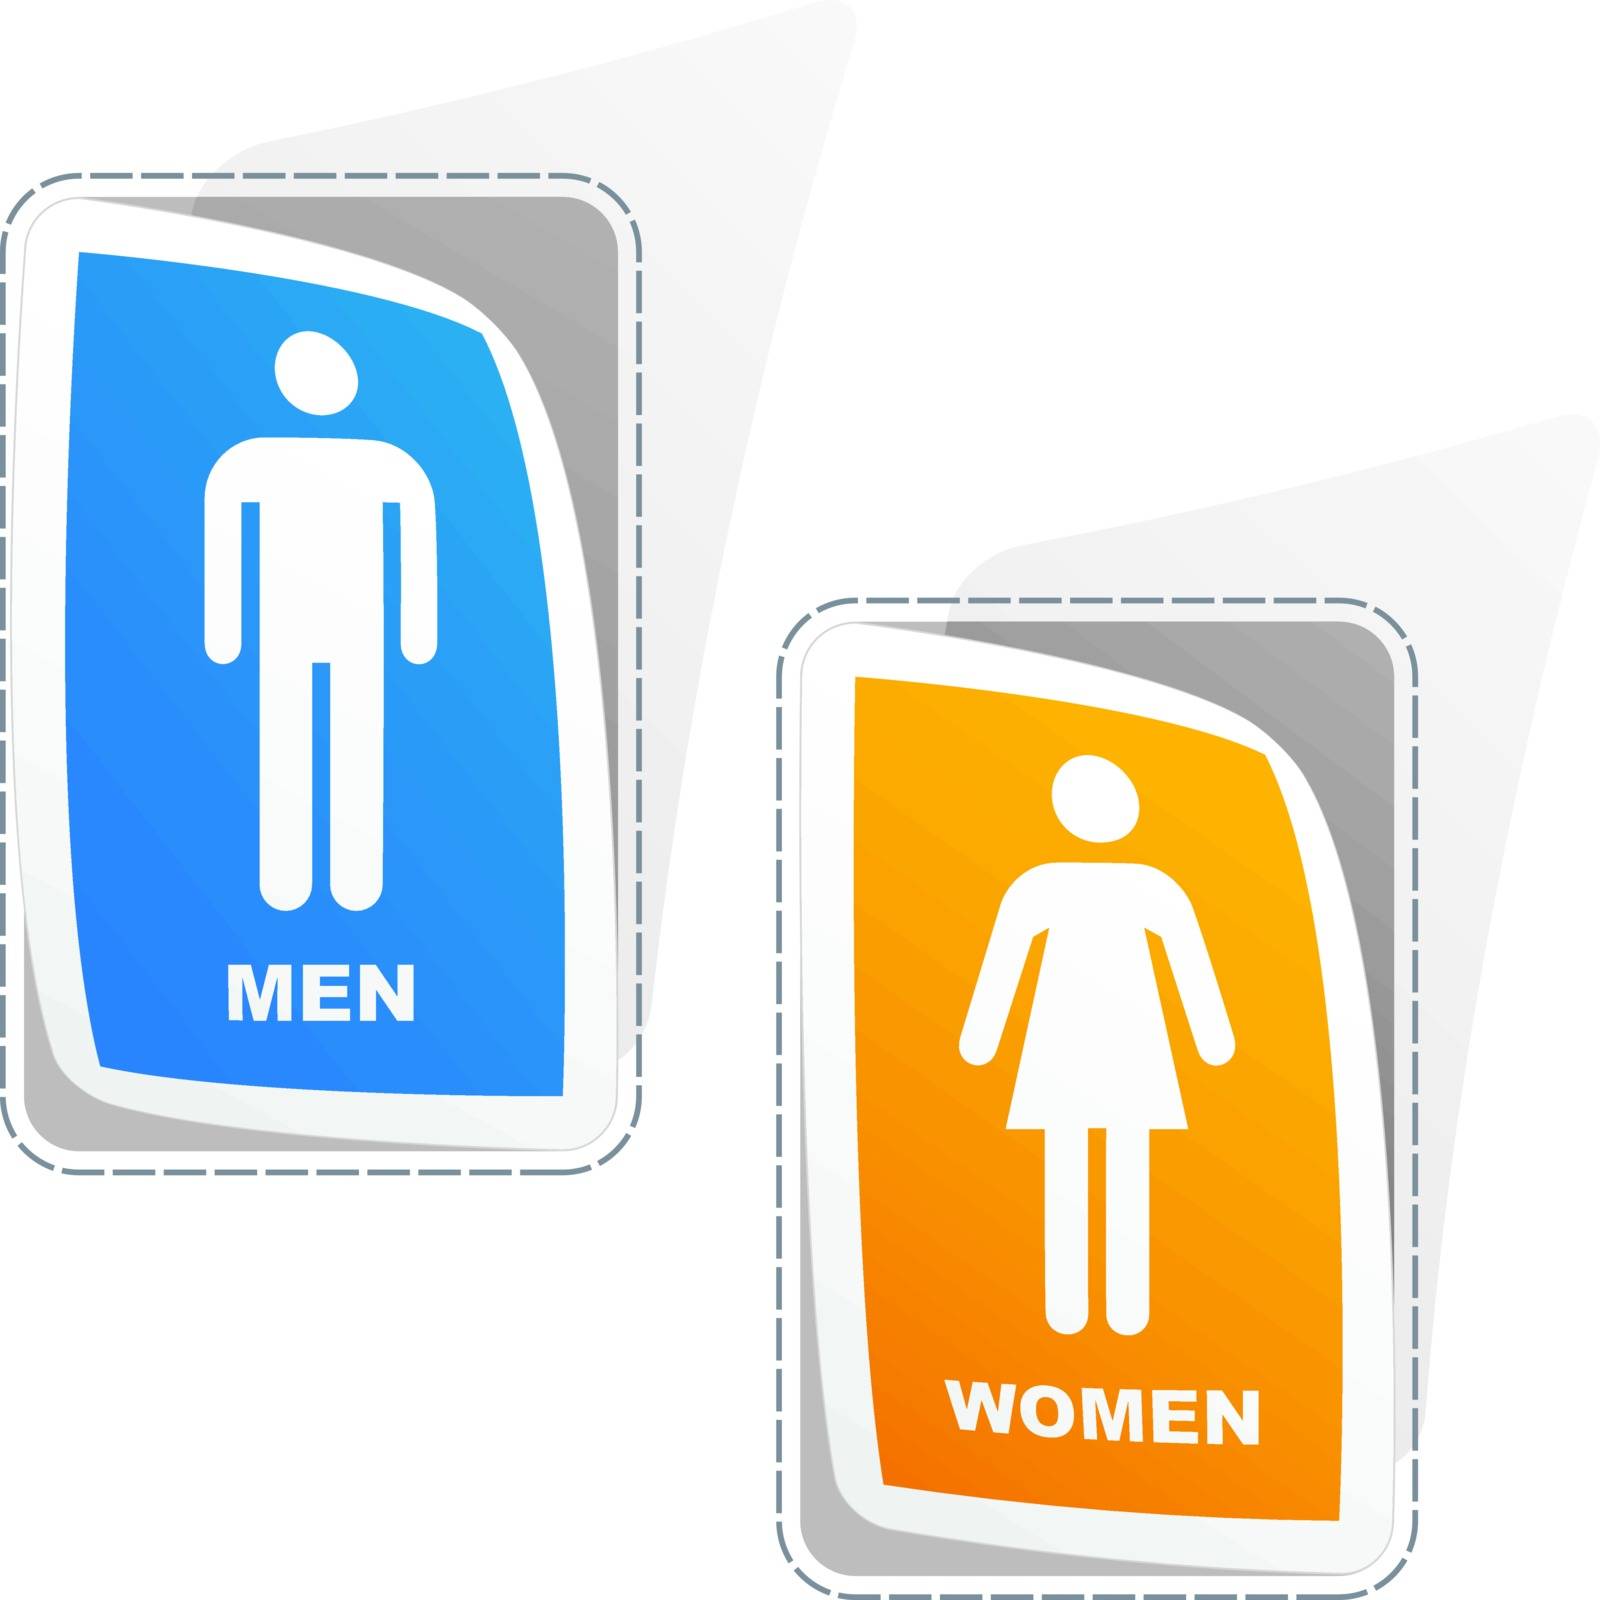 Men and women. Graphic element set.